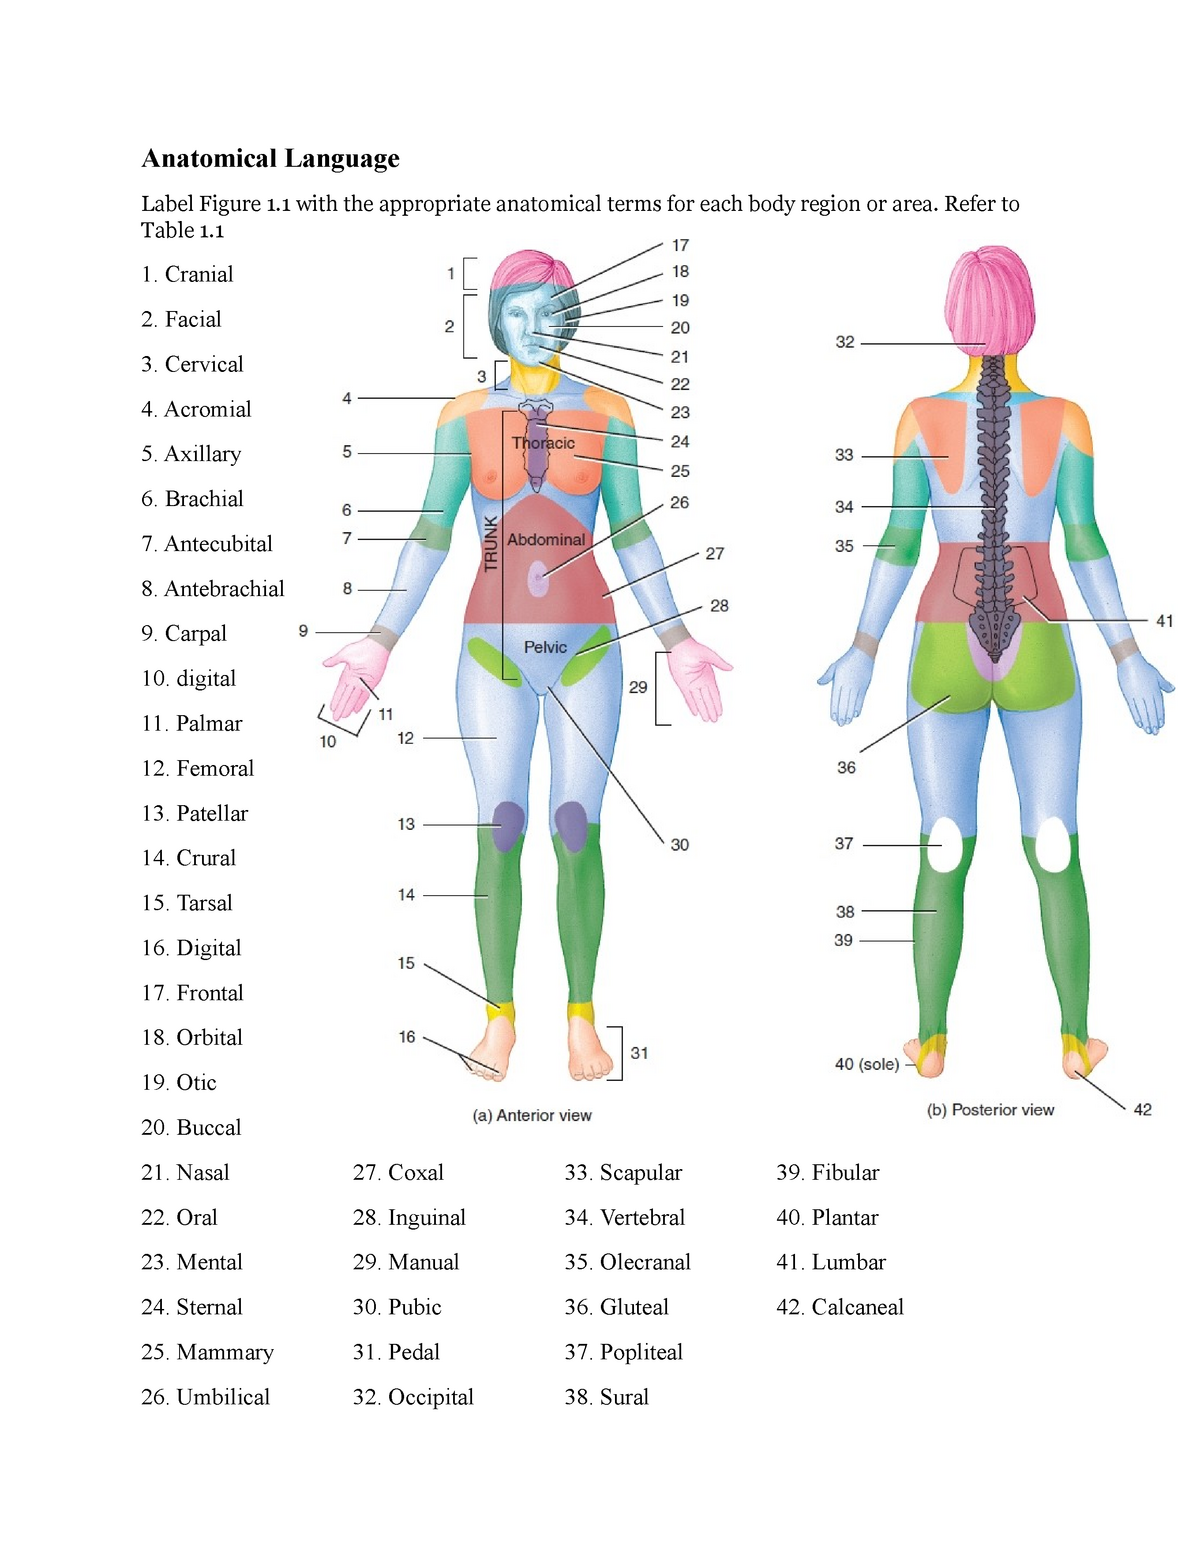 anatomy-and-physiology-labeling-abba-humananatomy